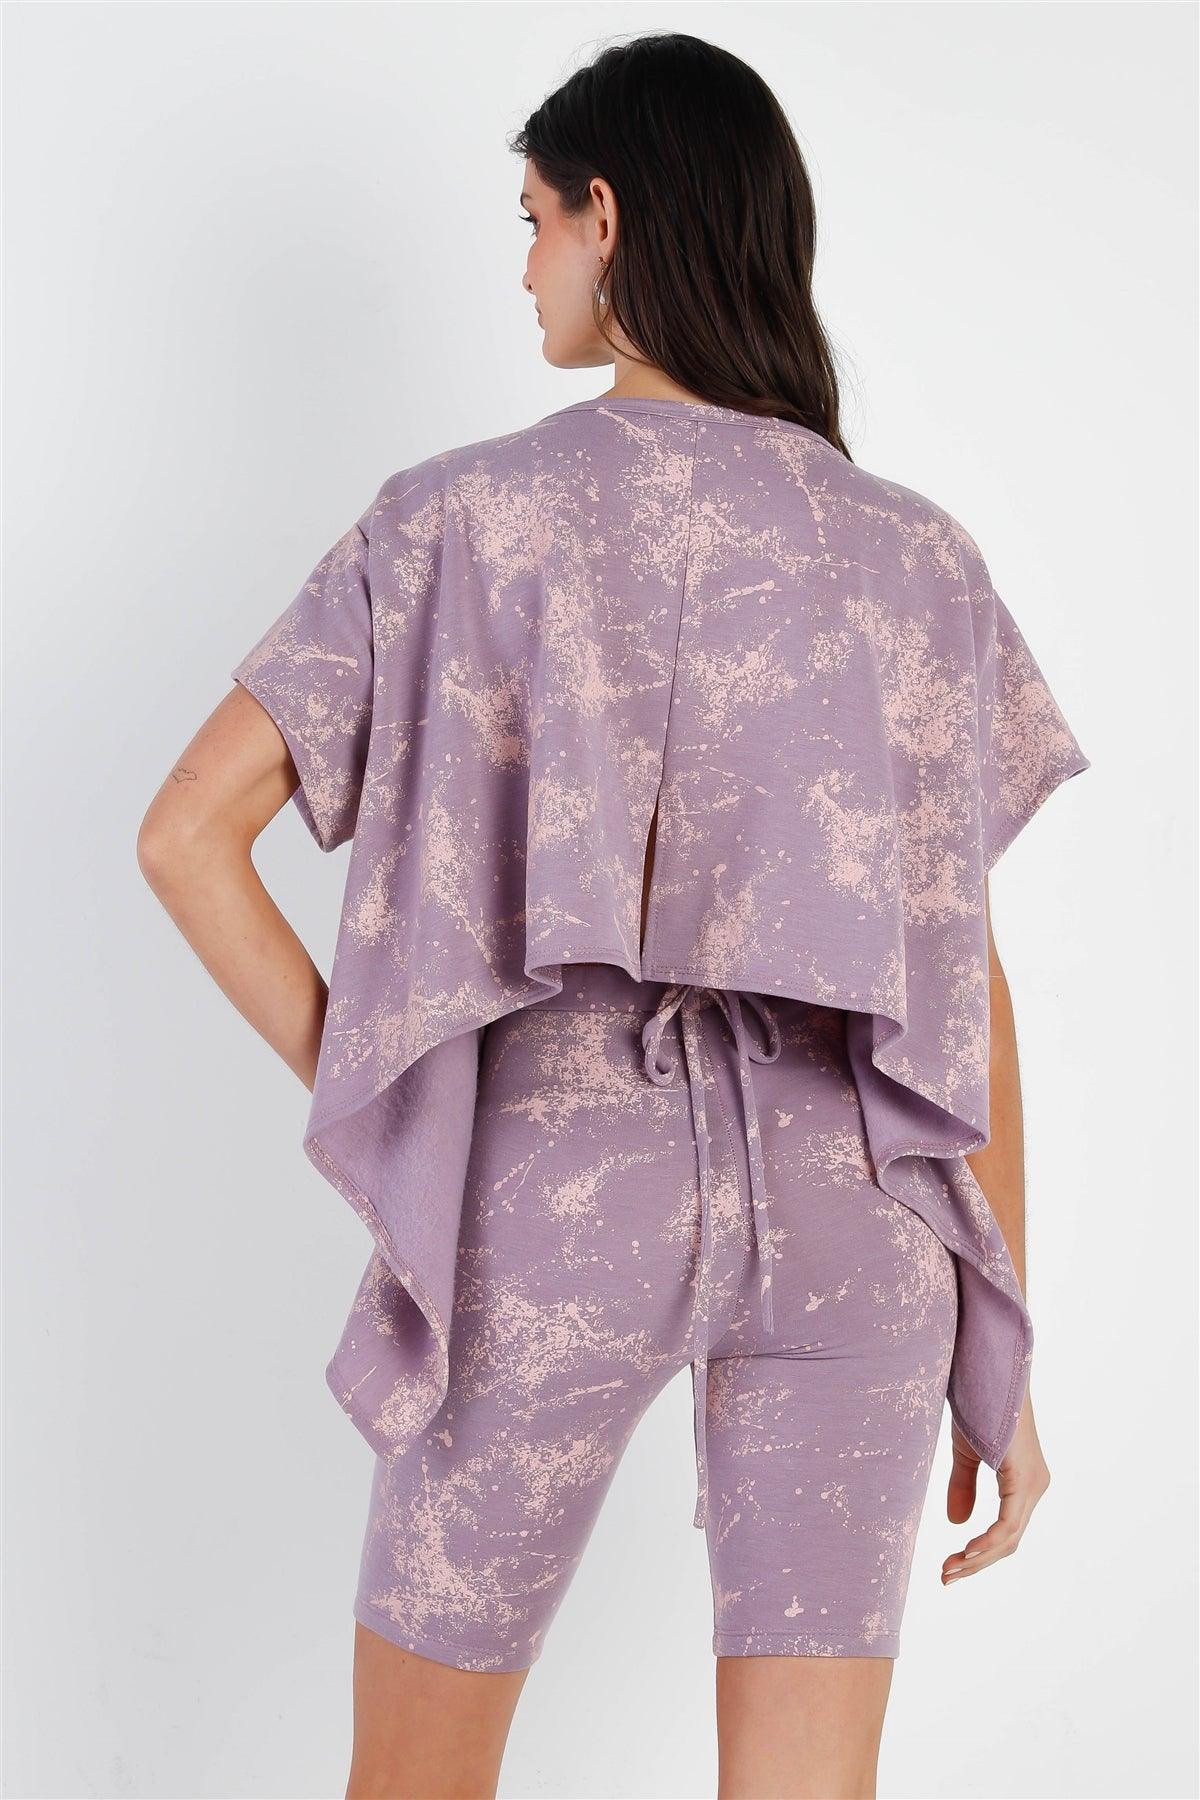 Lavender Splattered Paint Fleece Uneven Length Back Tie Detail Top & Biker Short Set /2-2-2